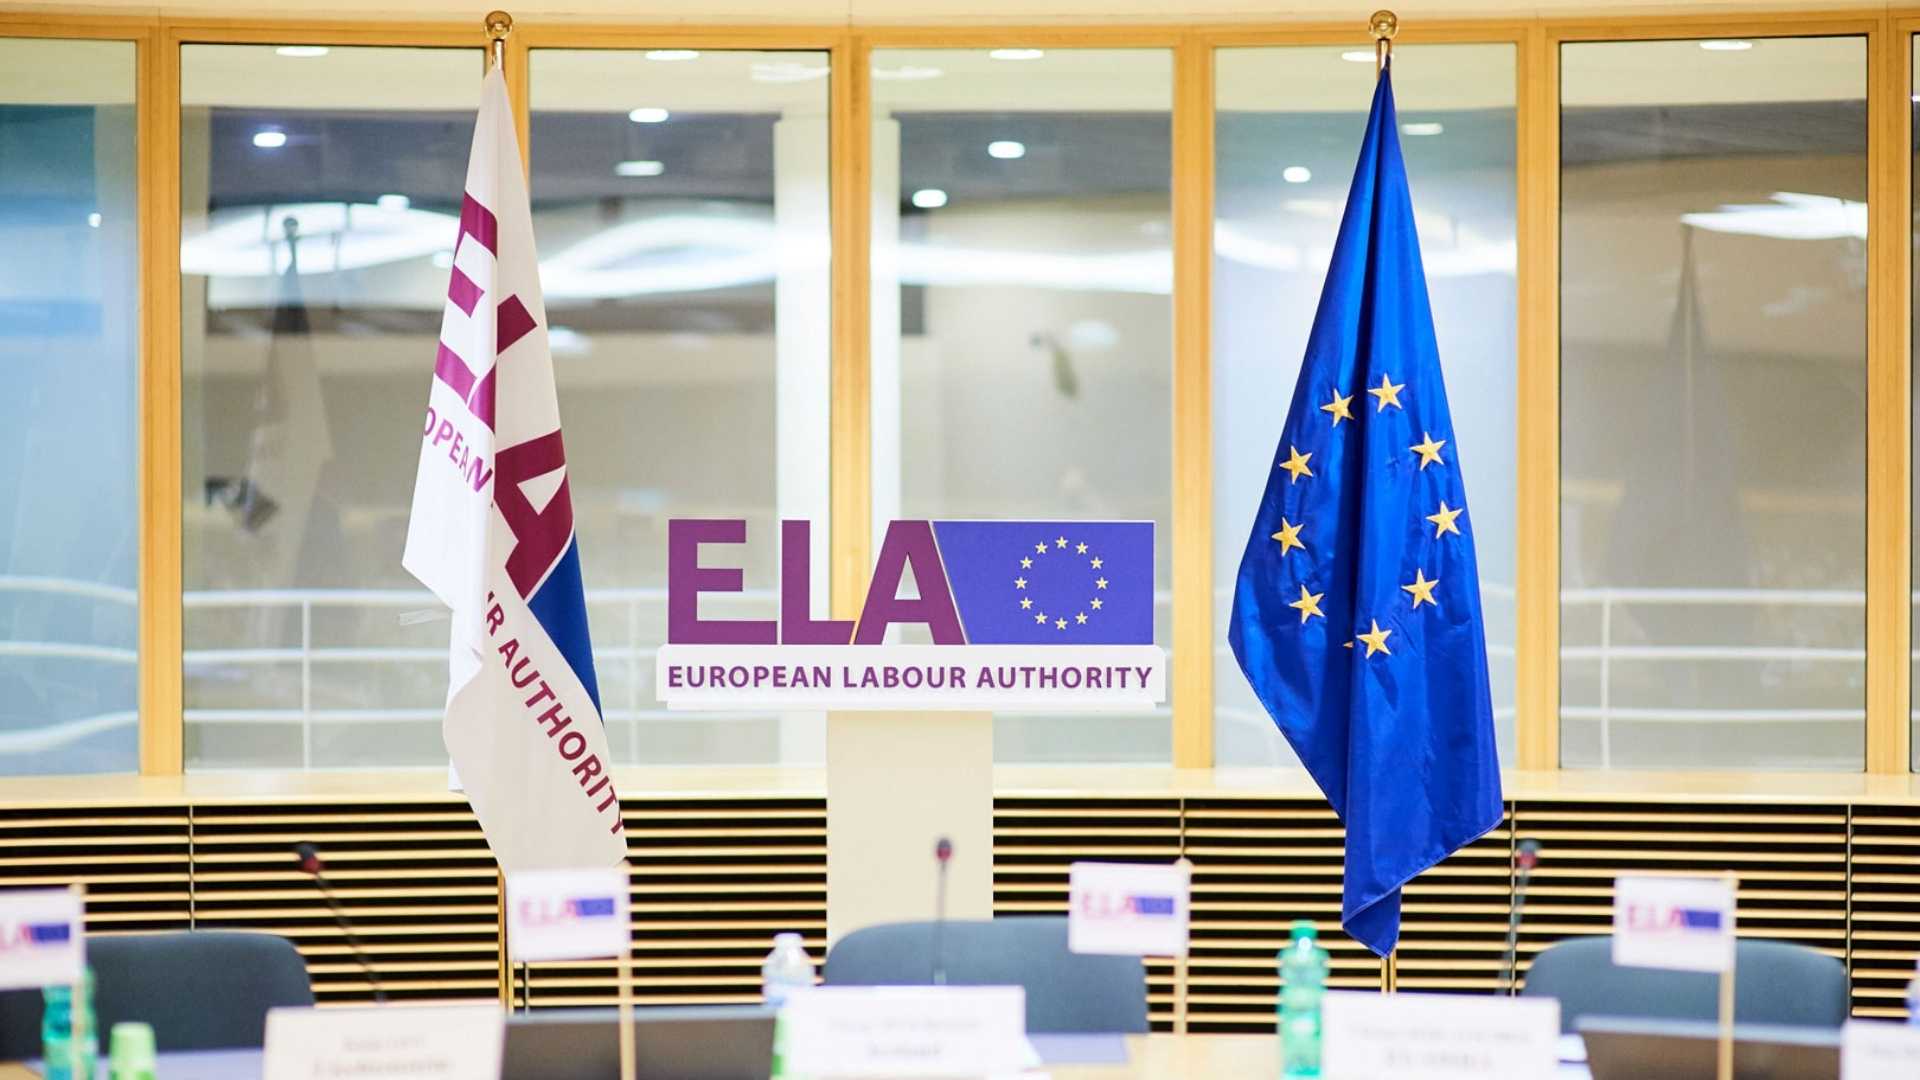 European Labour Authority